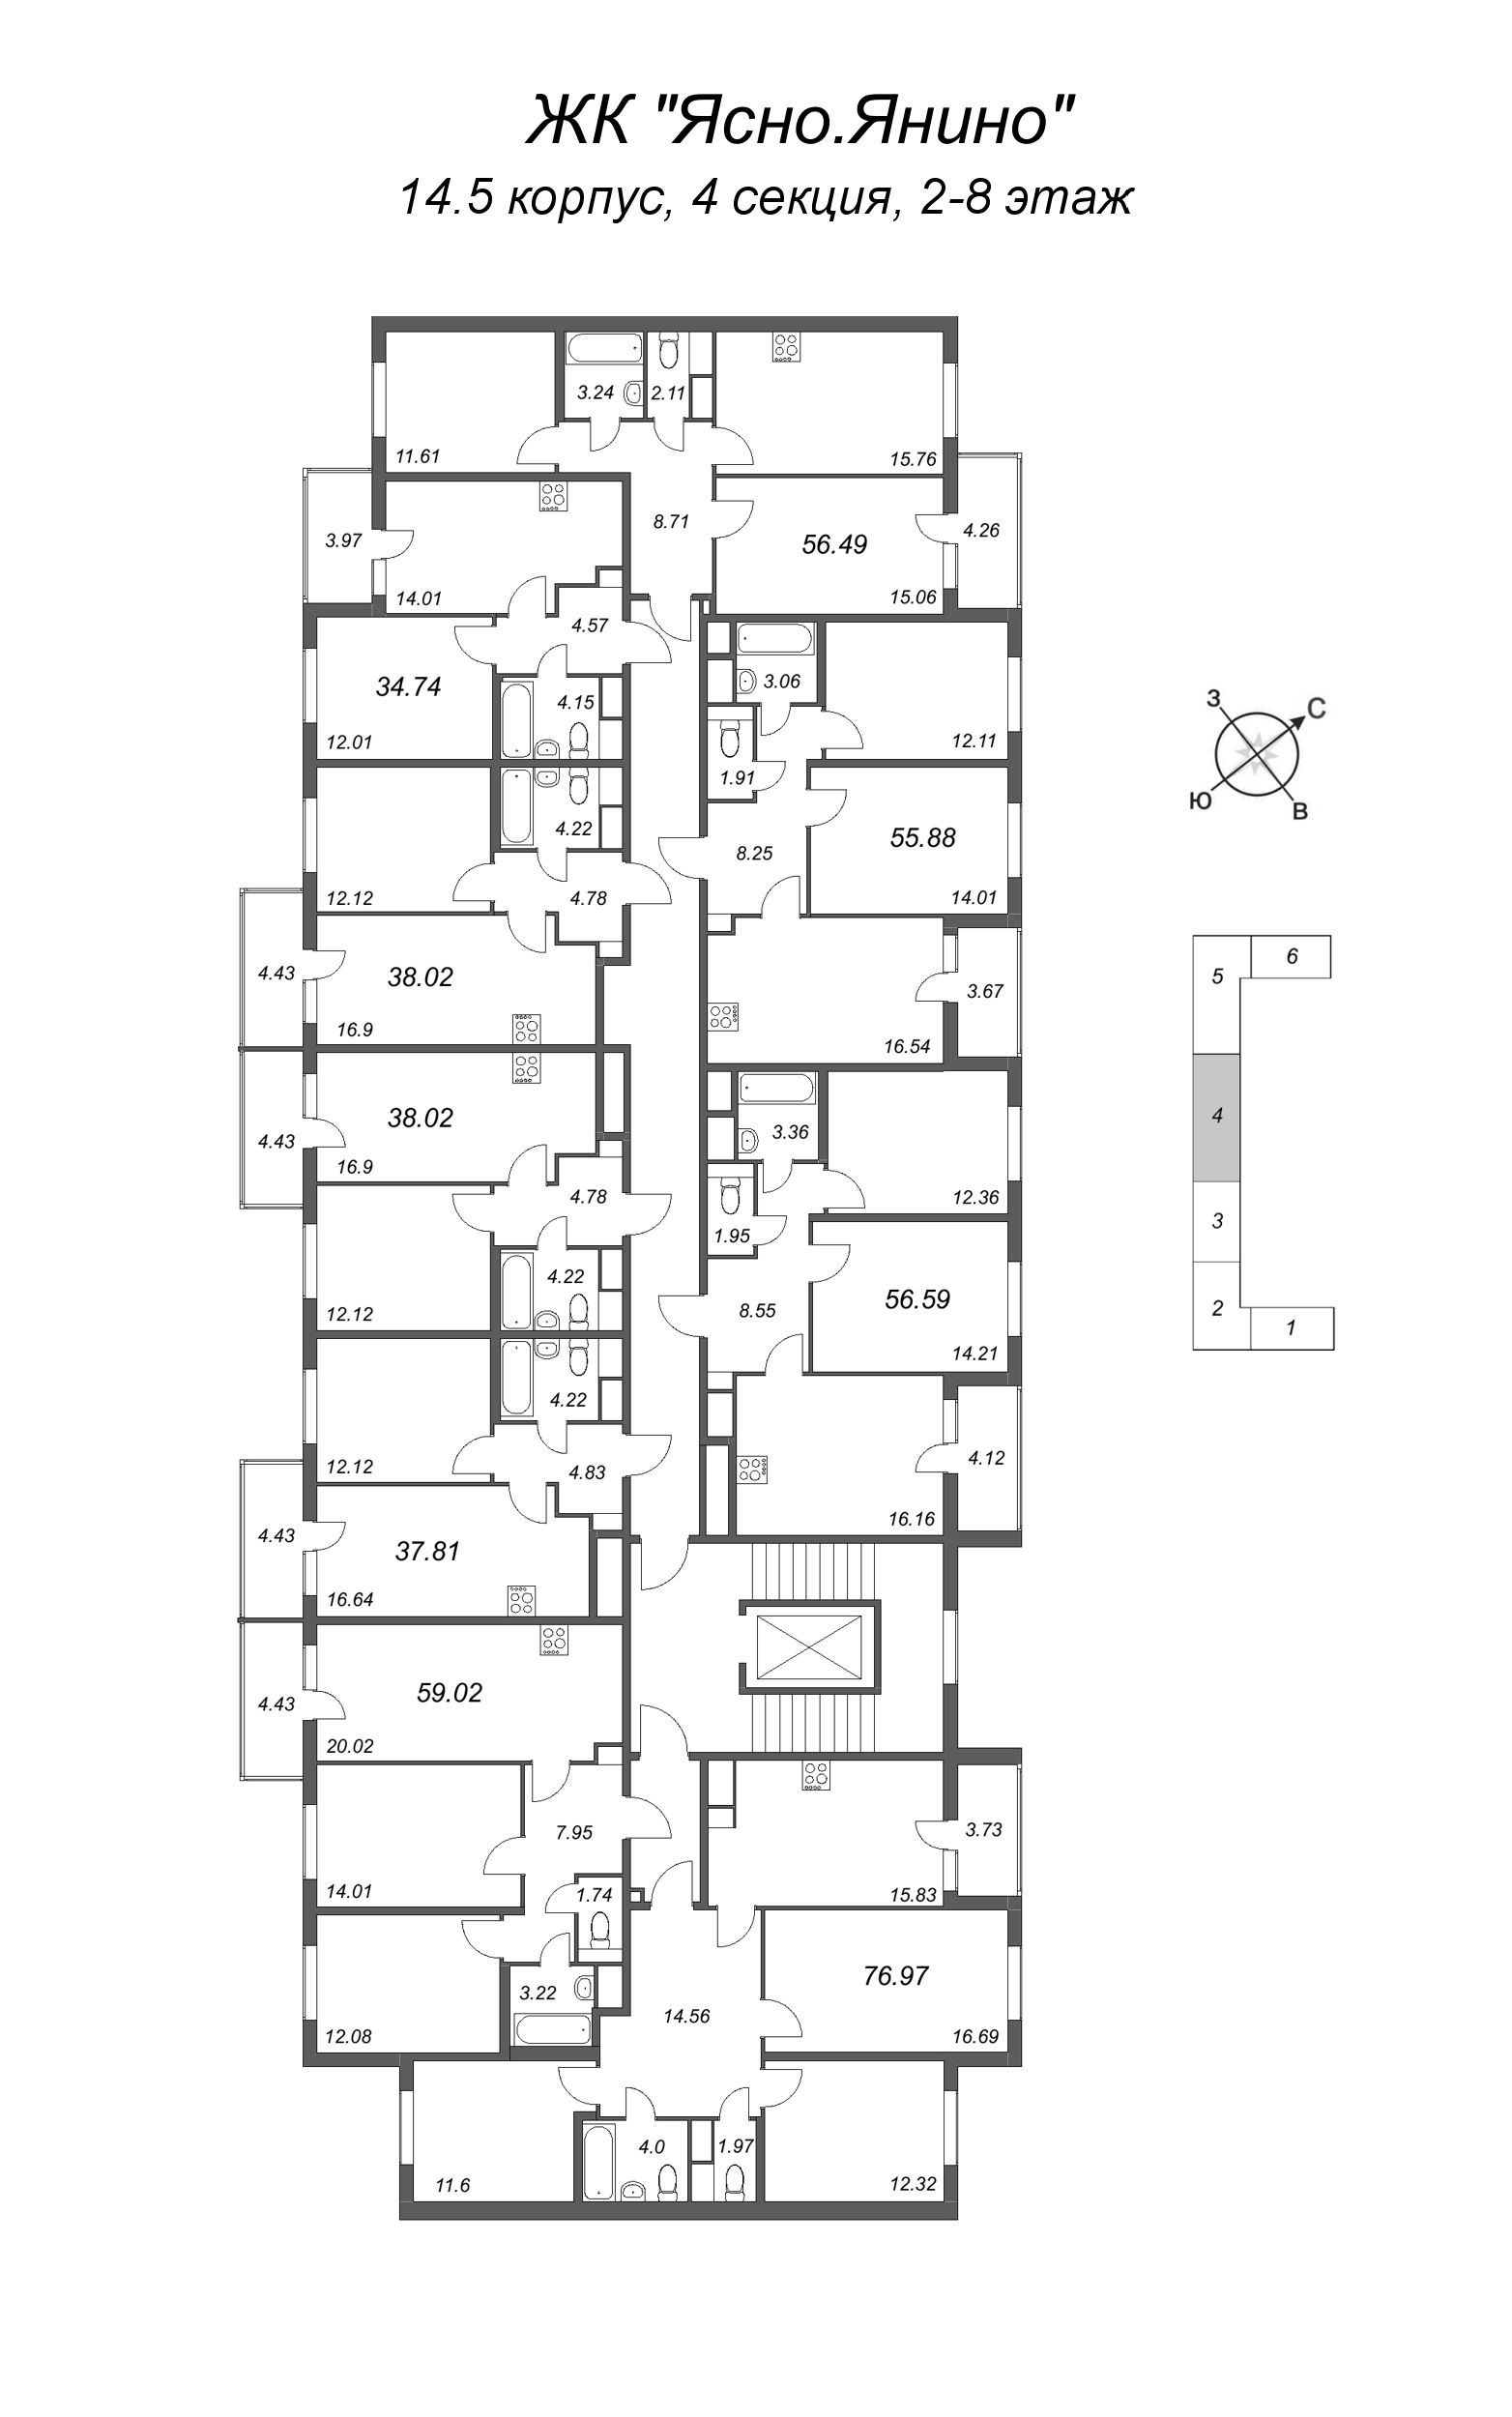 2-комнатная (Евро) квартира, 38.02 м² - планировка этажа